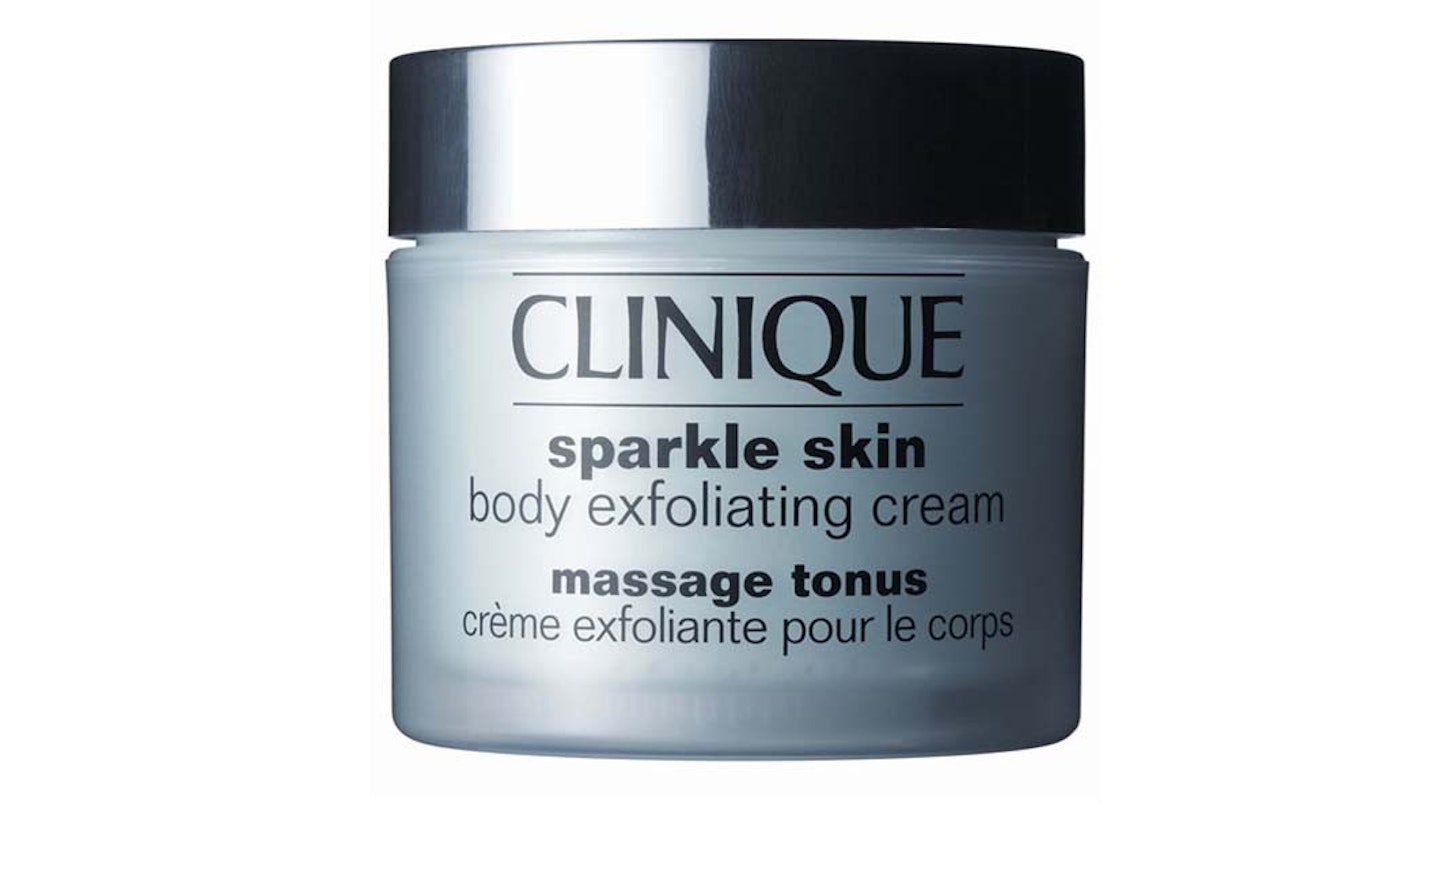 2. Clinique Sparkle Skin Body Exfoliating Cream